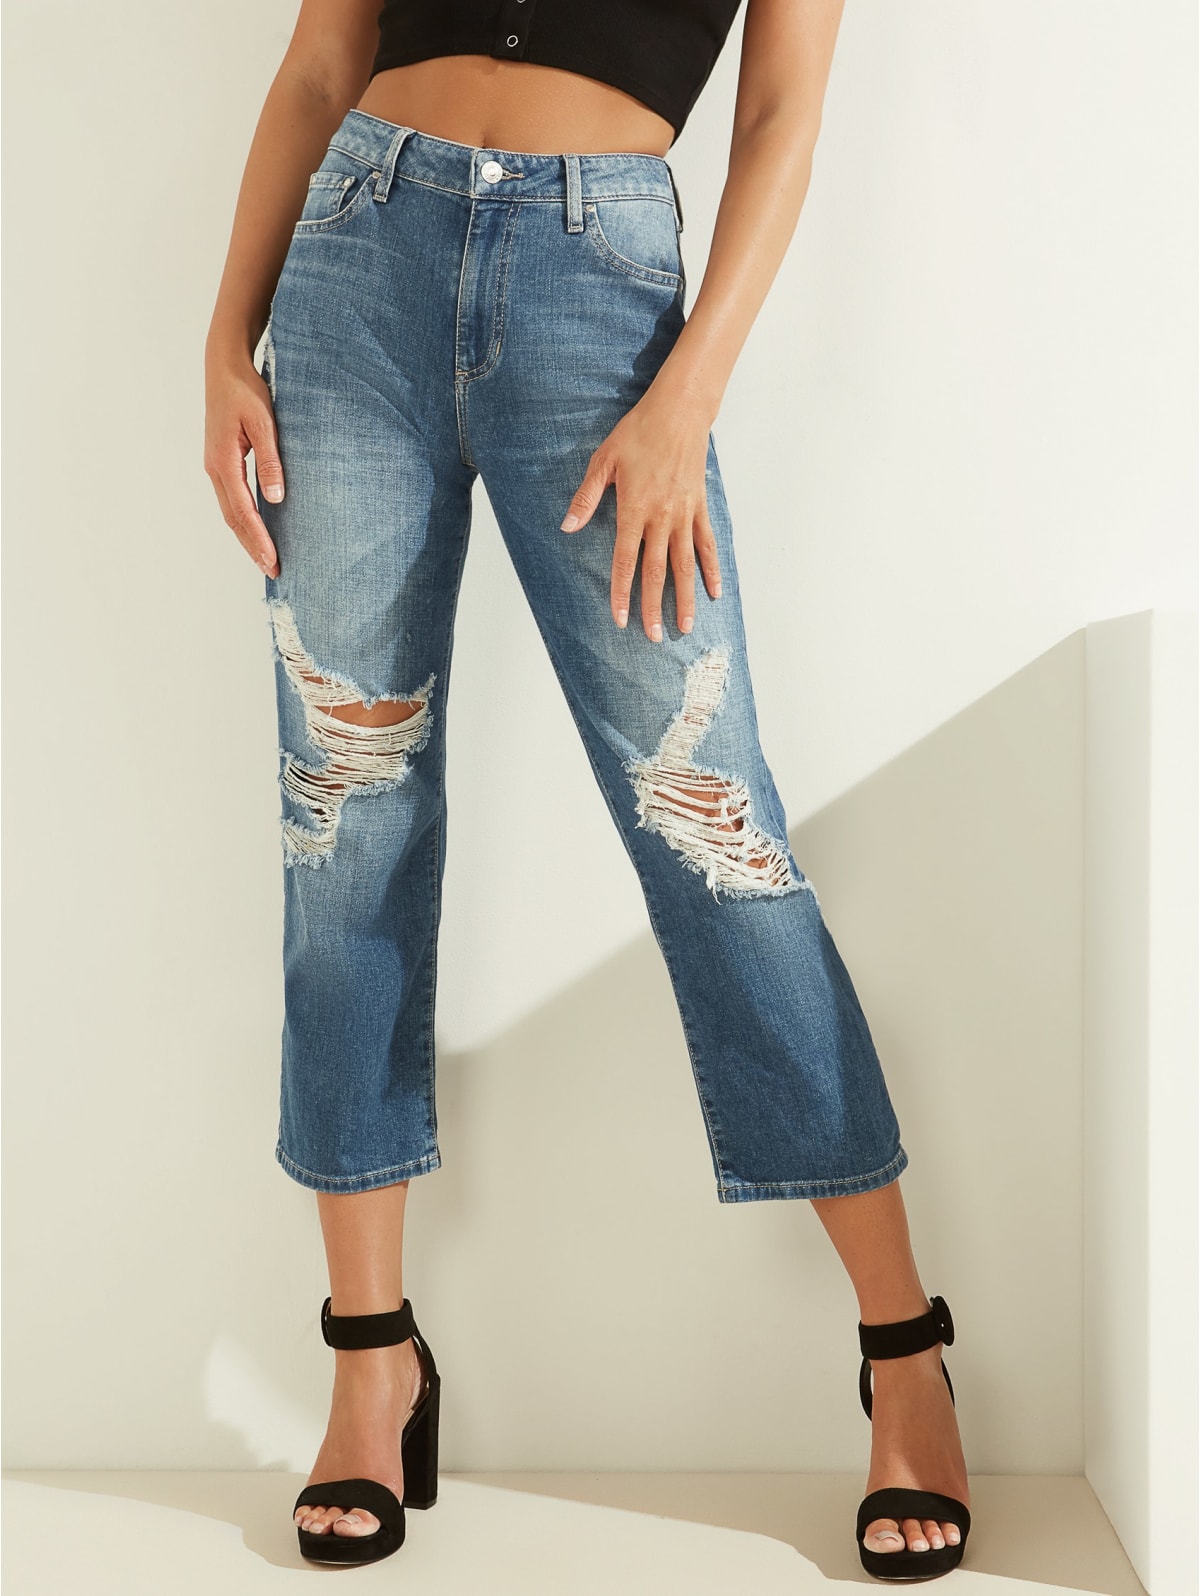 graphic print jeans